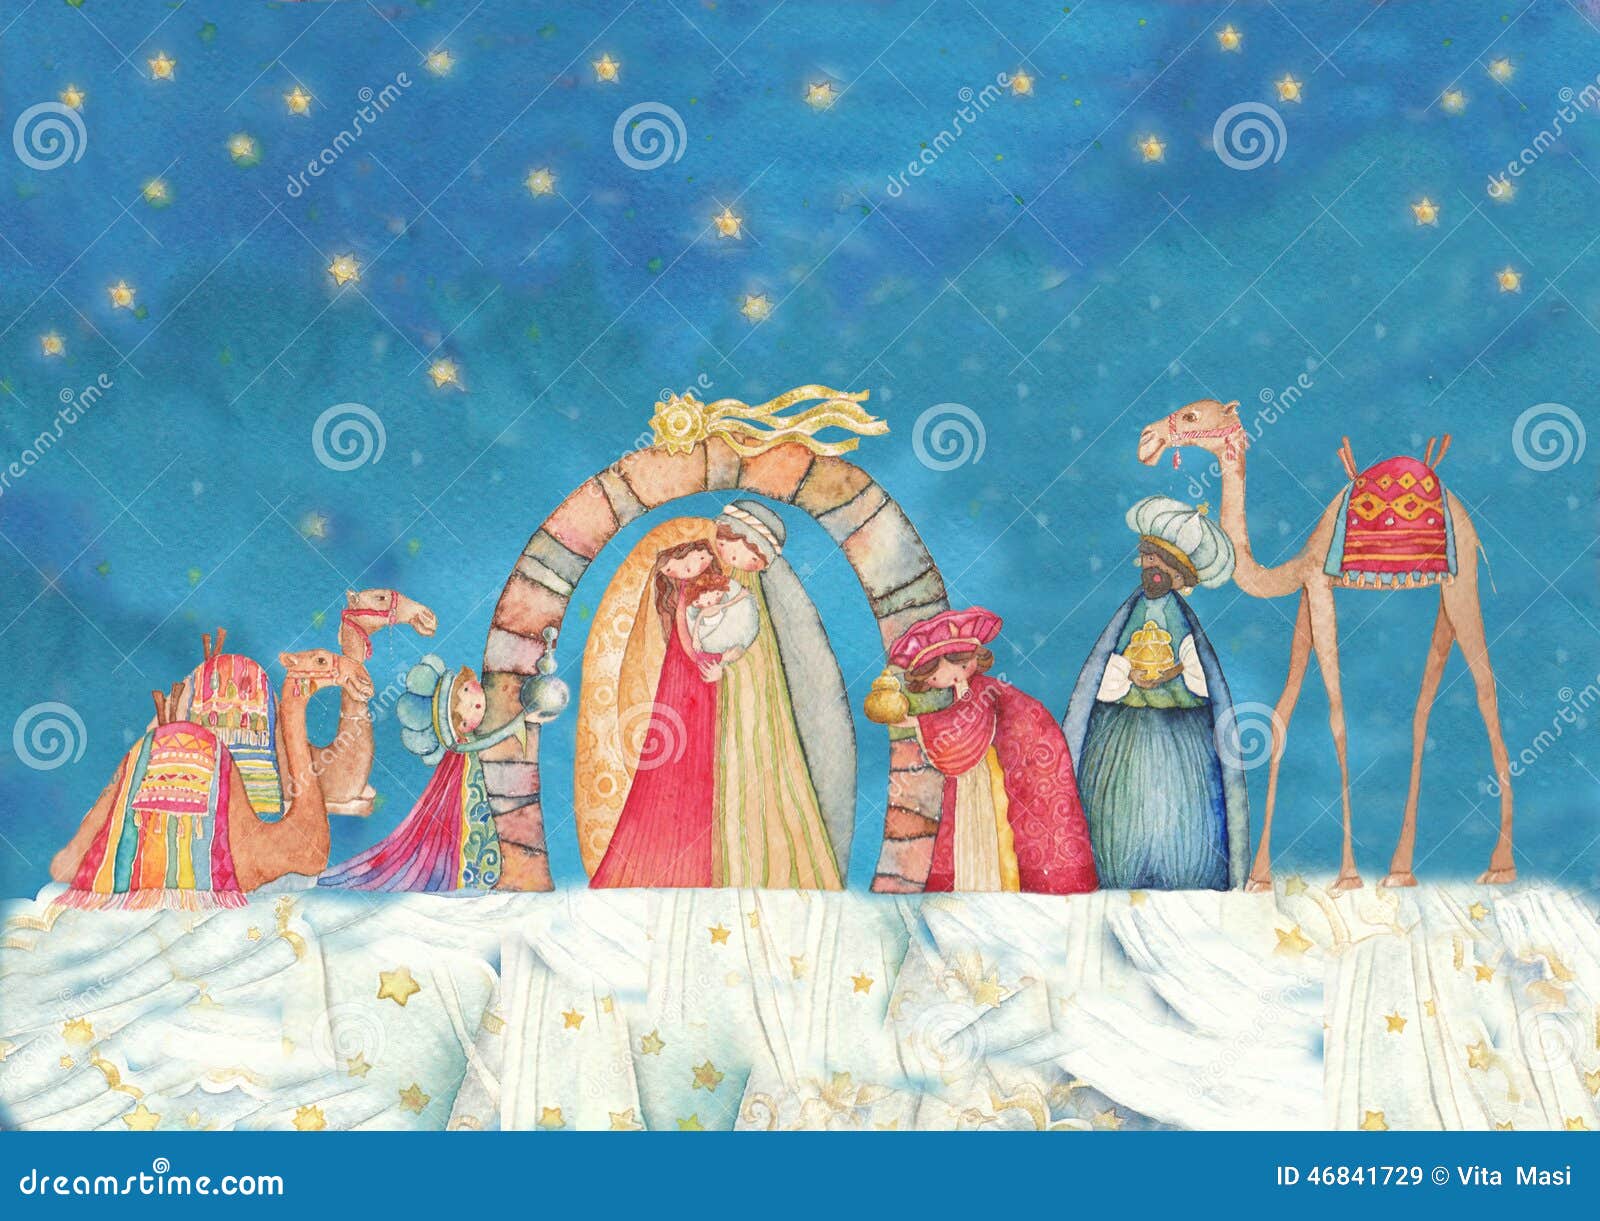 Illustration of Christian Christmas Nativity scene with the three wise men vector illustration